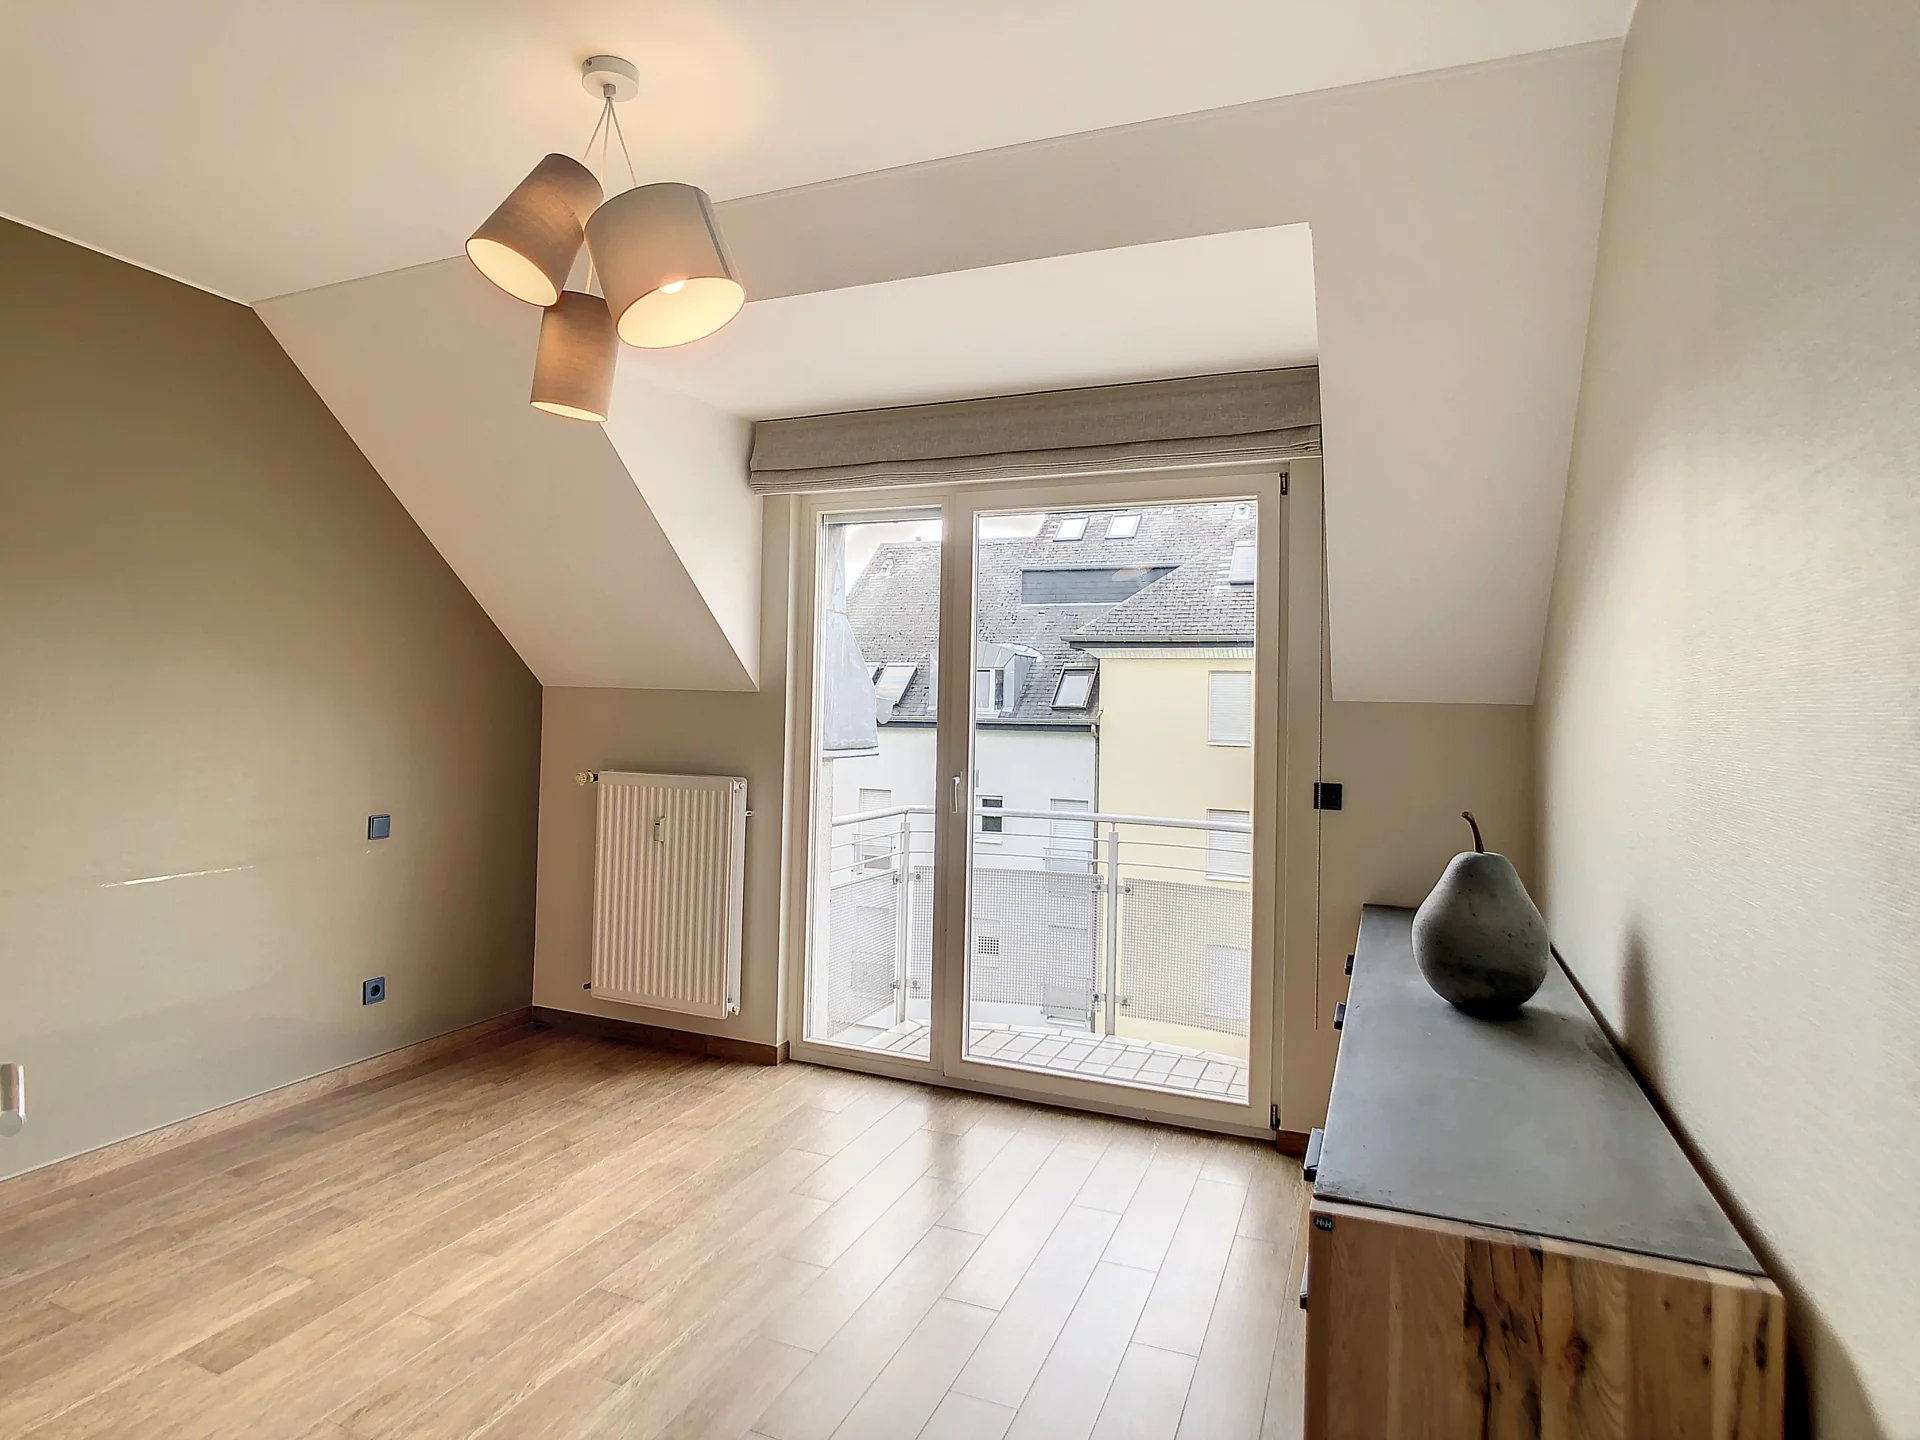 Sale Apartment - Warken - Luxembourg